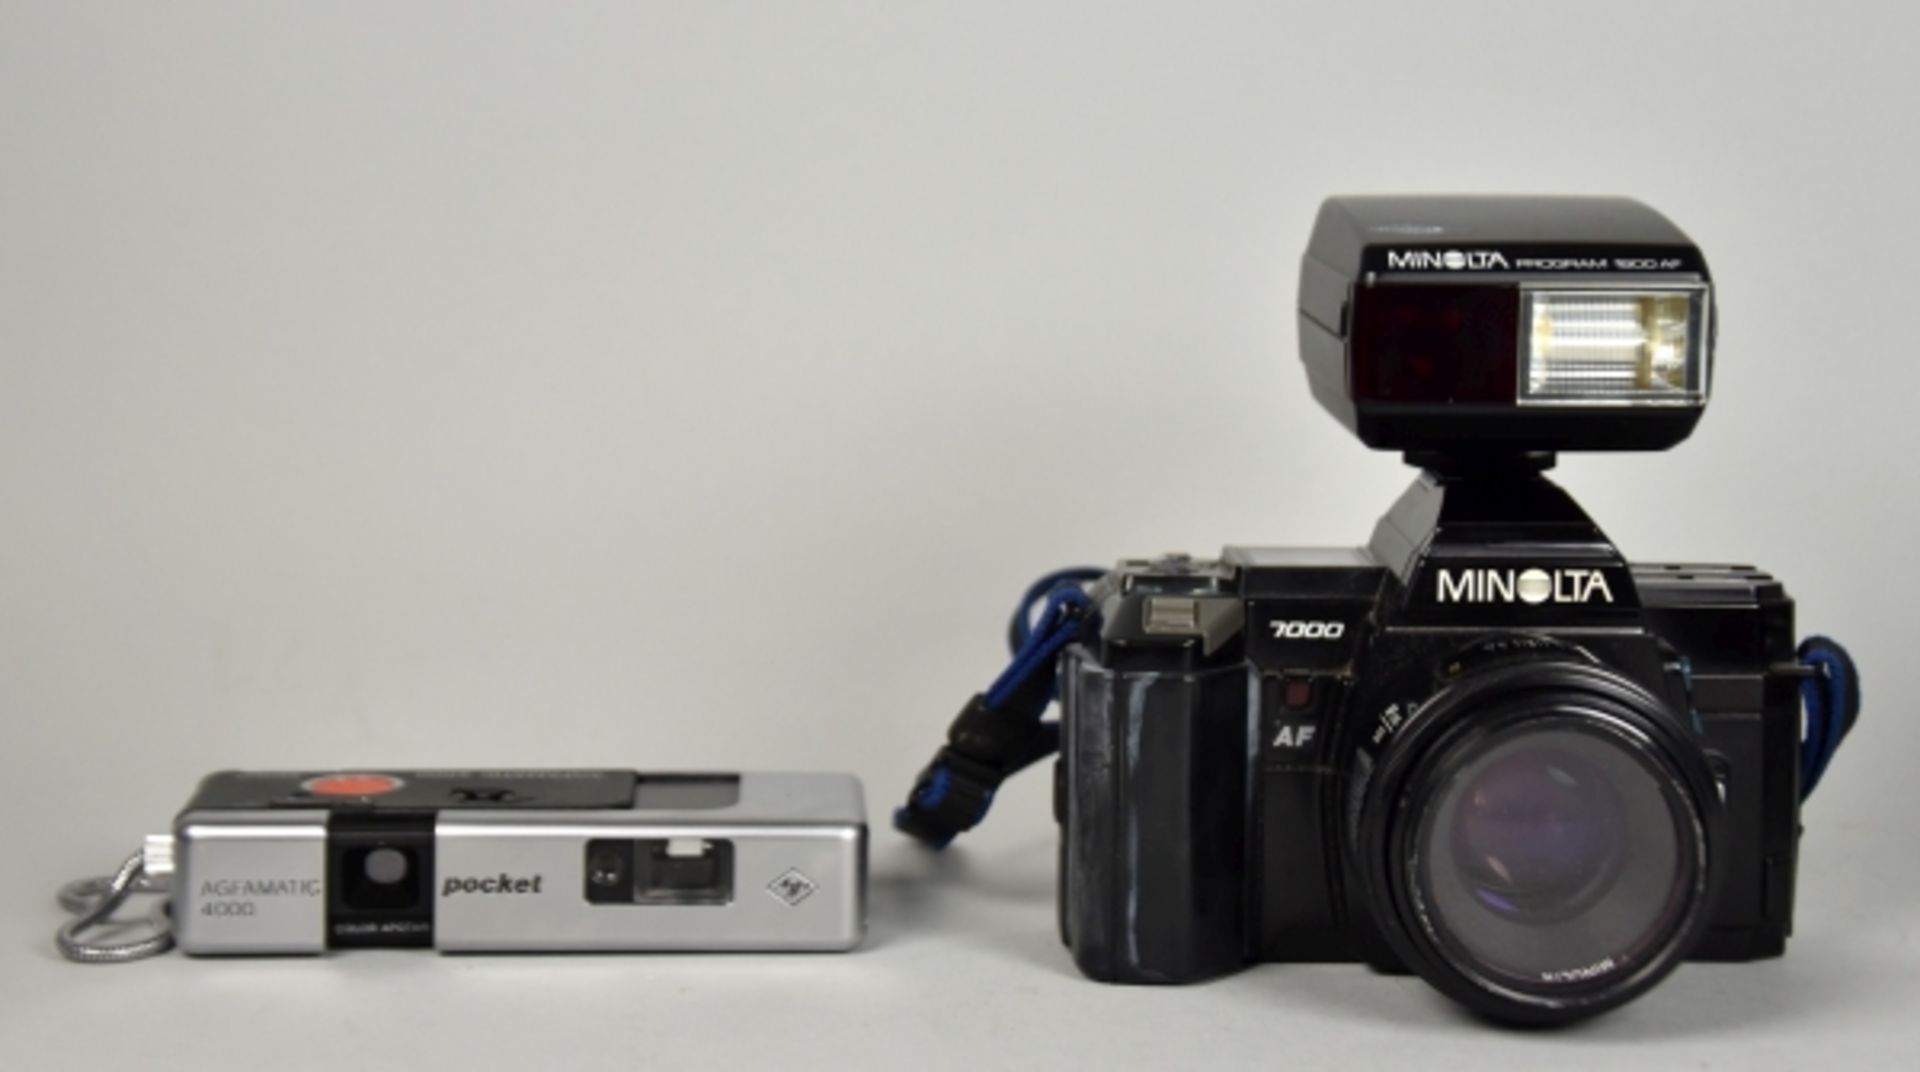 3 FOTOAPPARATE Konvolut, Agfa Agfamatic 4000 pocket Sensor, Bj. 1974-76, Objektiv Color Apotar, 1: - Bild 2 aus 7